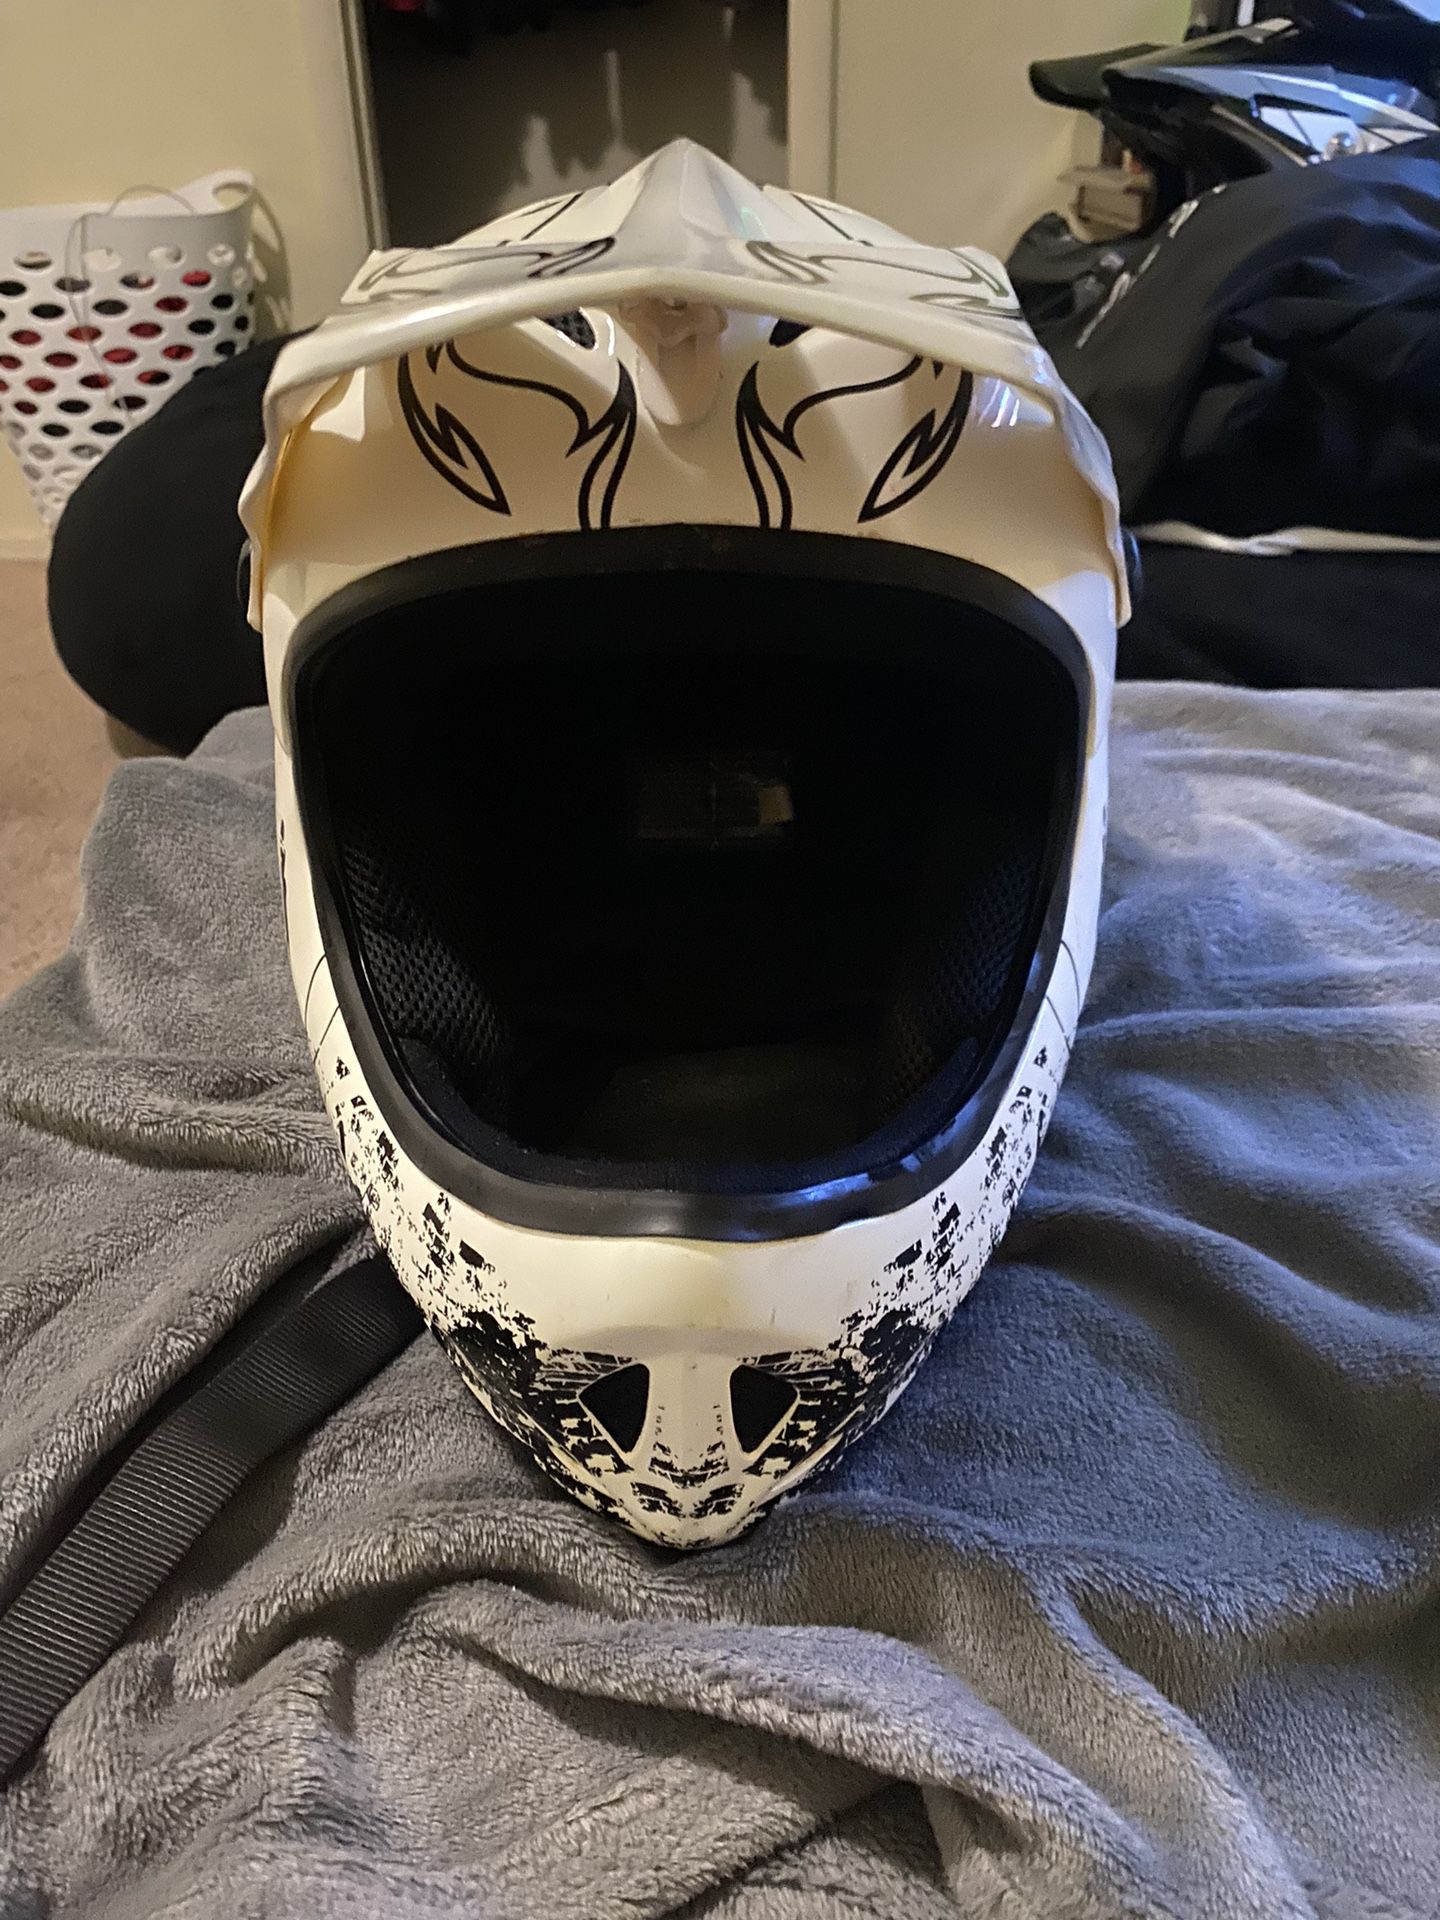 O‘Neal Dirt bike Helmet Almost Brand New 